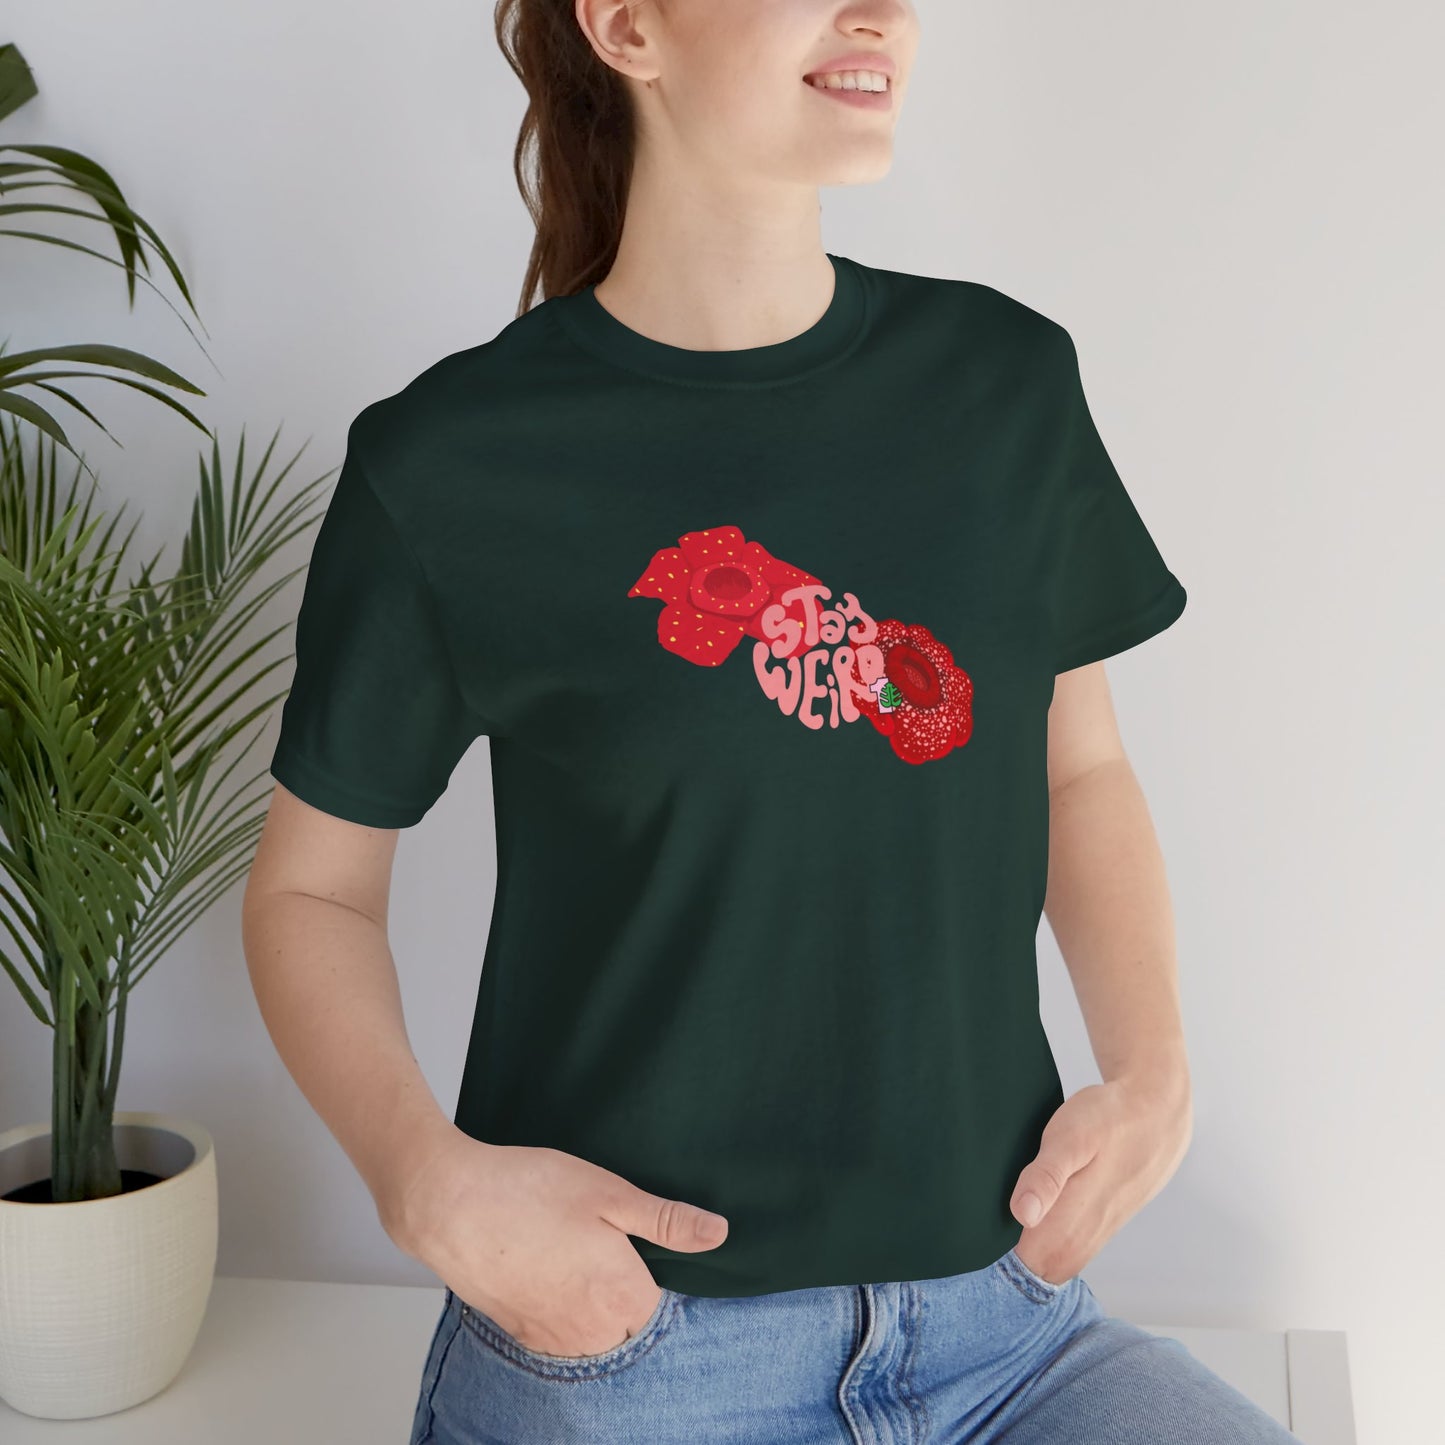 Stay Weird Plant Lover Shirt